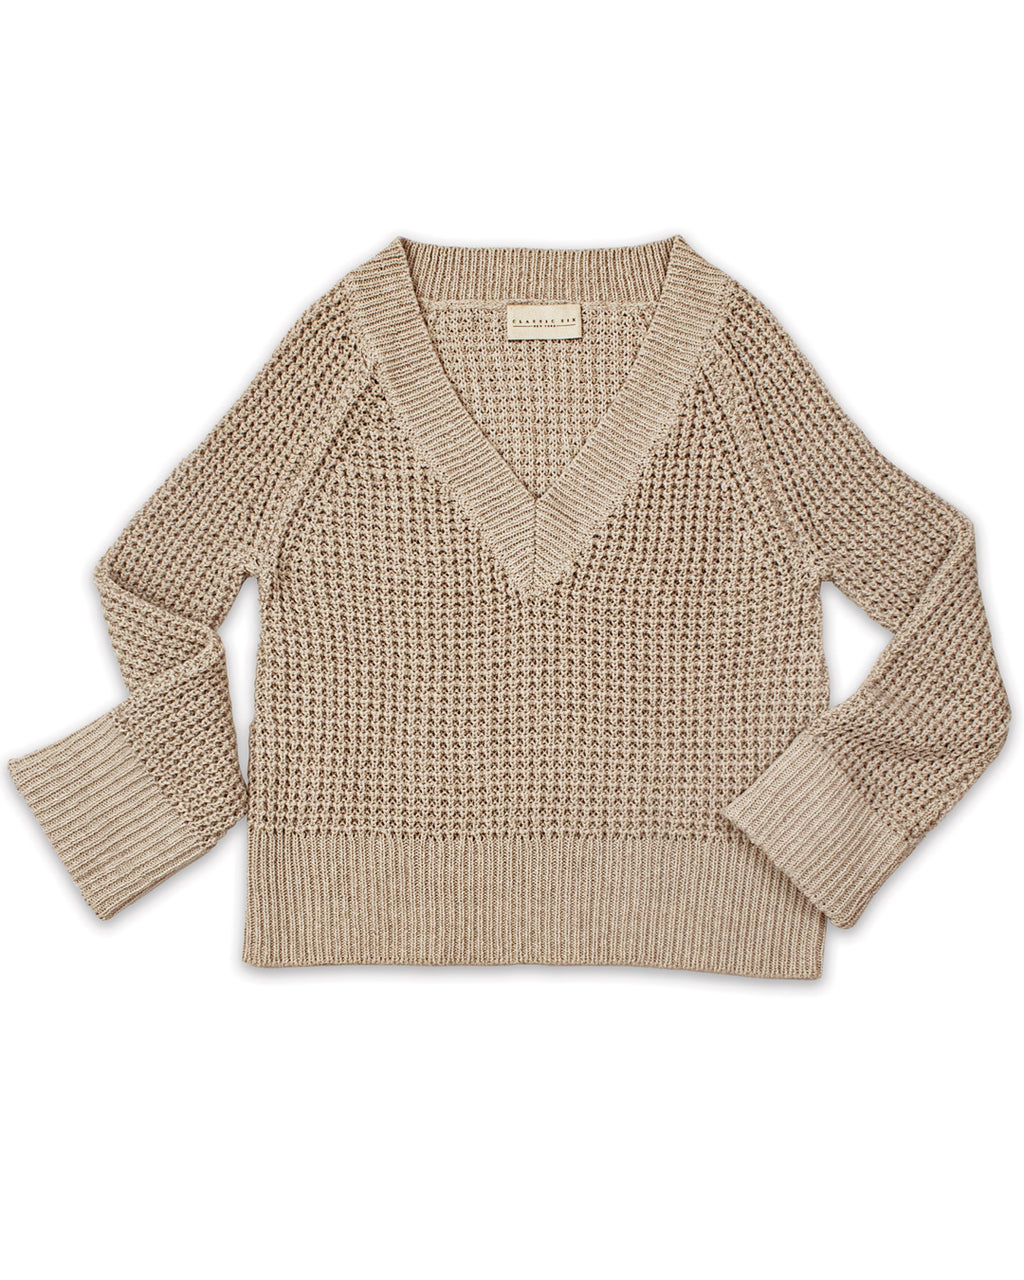 Brigitte Linen Sweater – Perfect Year Around Sweater – Classic Six